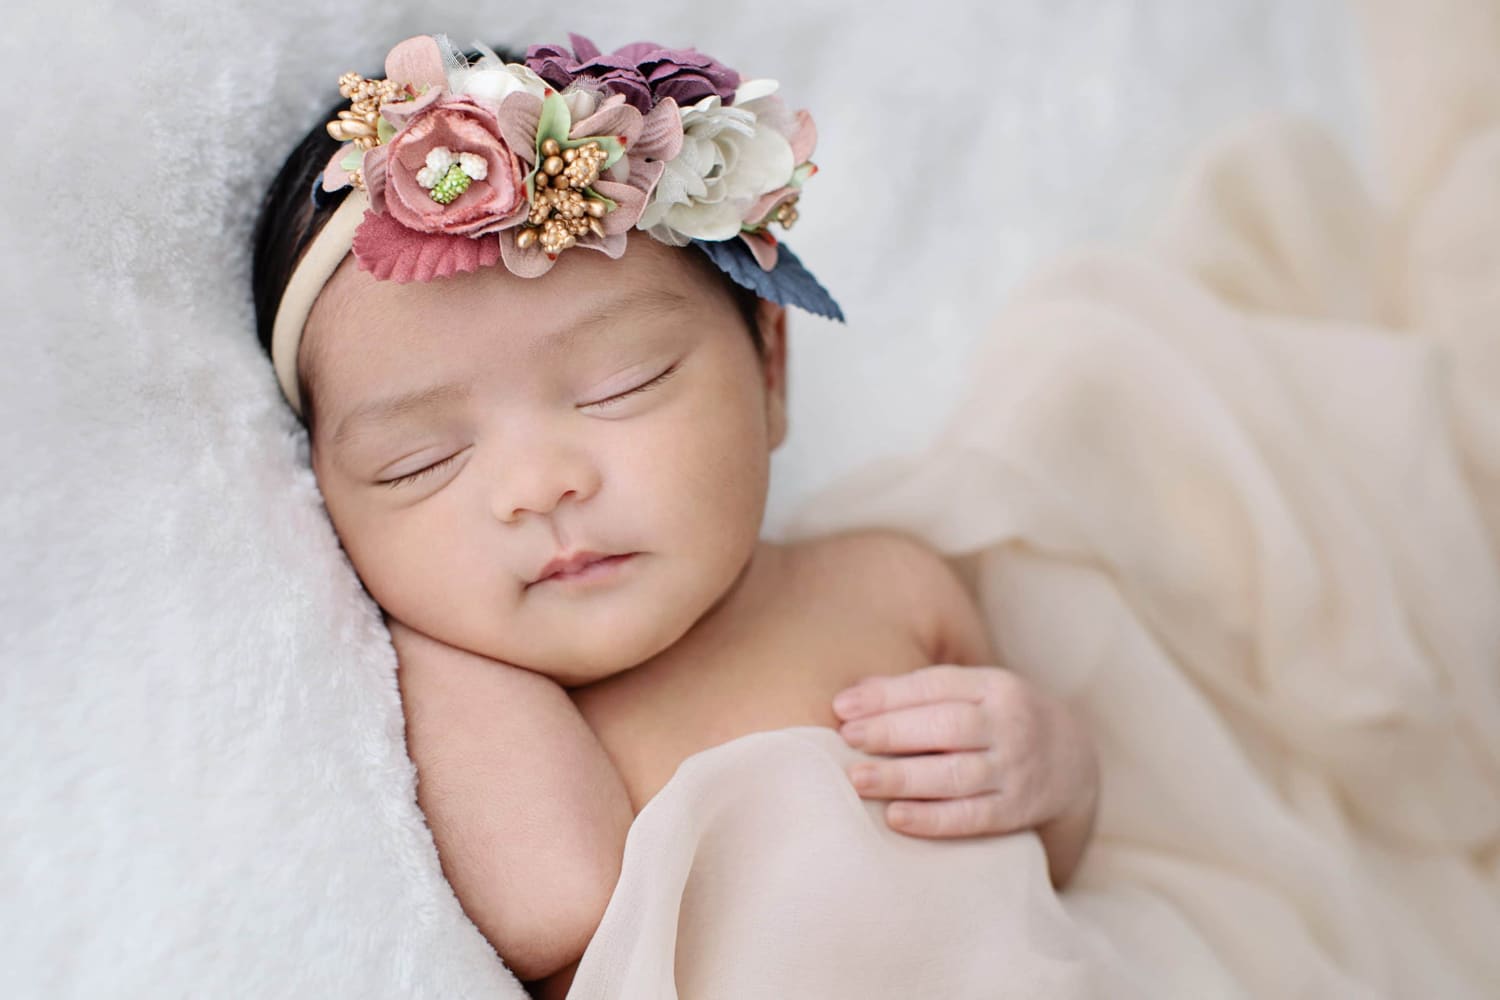 A newborn baby with a flower headband.